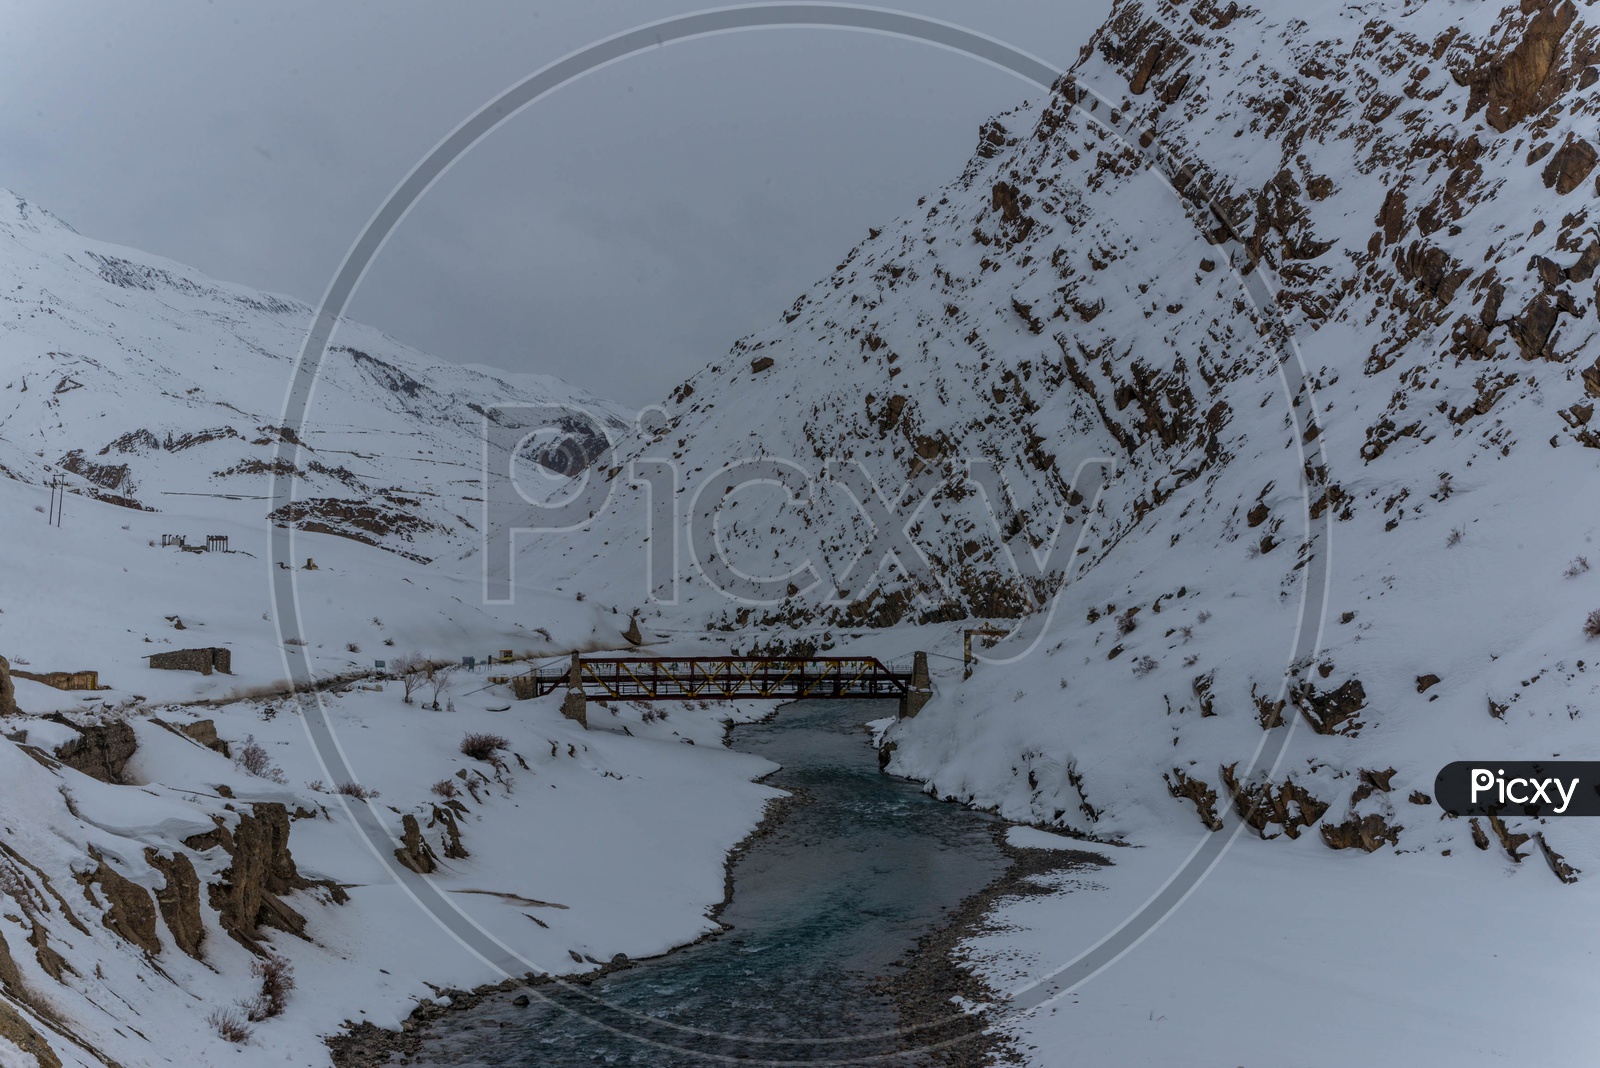 Spiti River in winter season covered in Snow